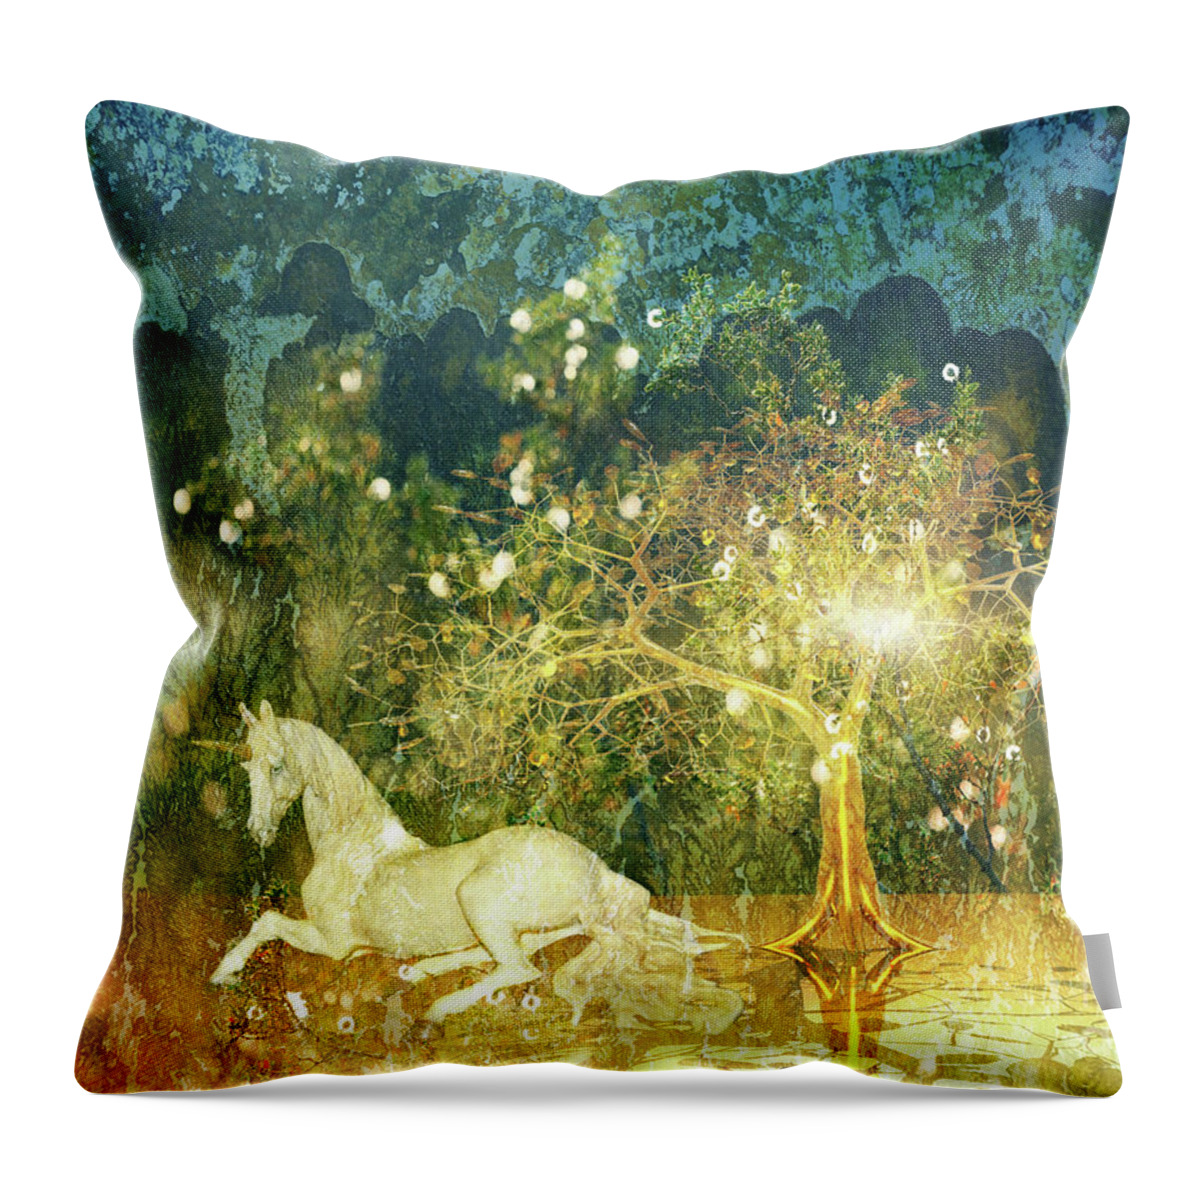 Unicorn Throw Pillow featuring the digital art Unicorn Resting Series 3 by Digital Art Cafe